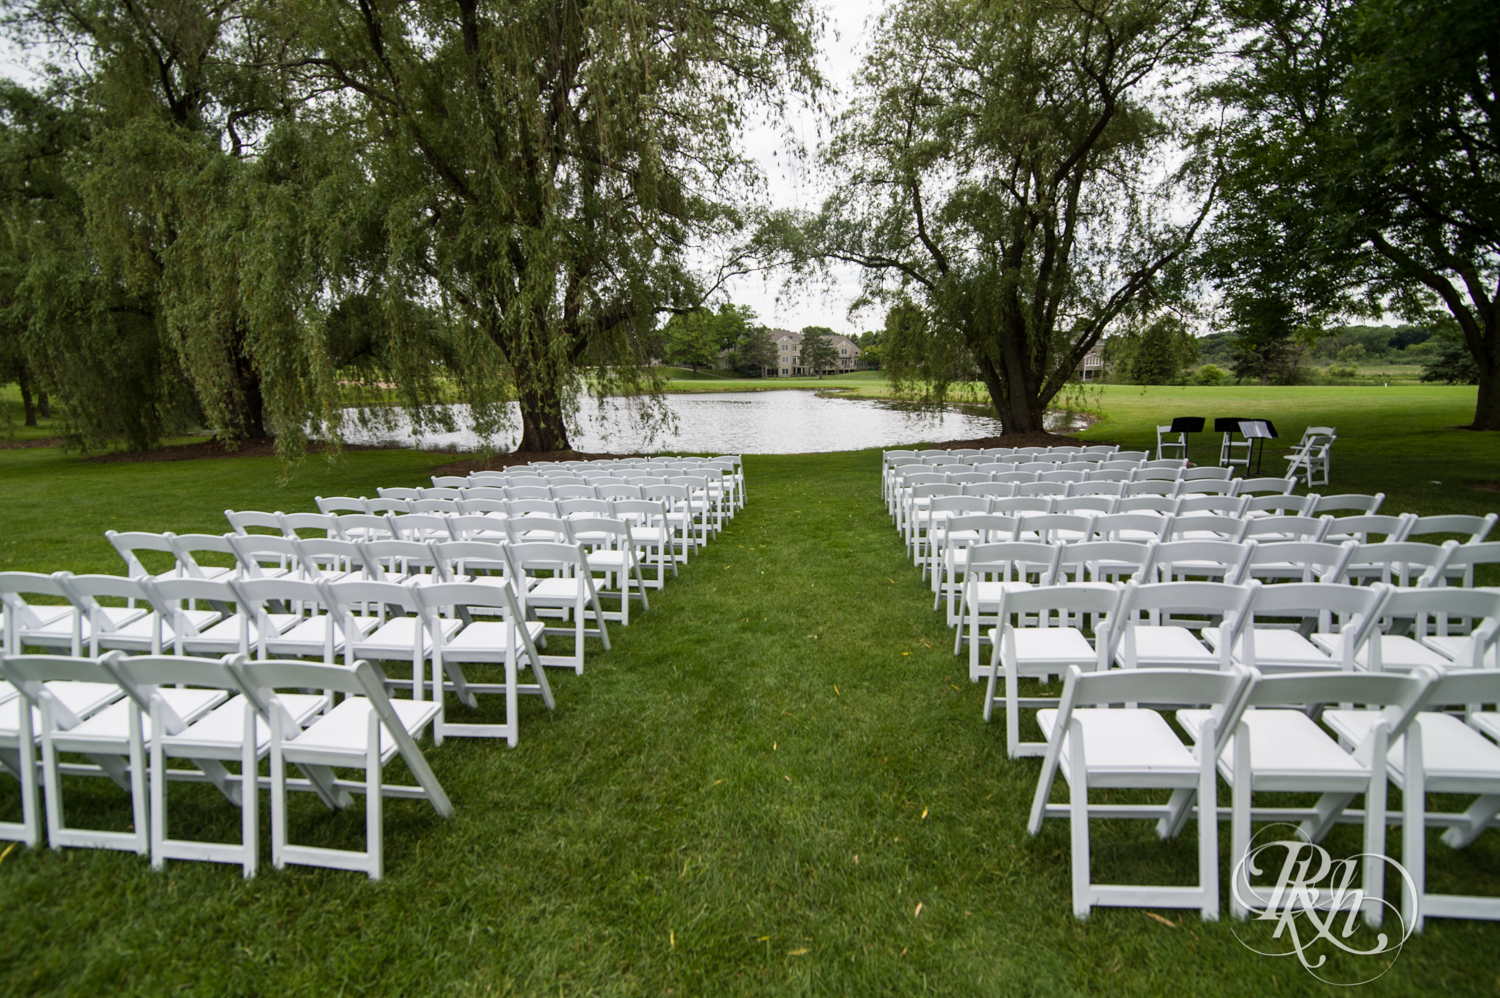 Outdoor wedding ceremony setup at Oak Glen Golf Course in Stillwater, Minnesota.